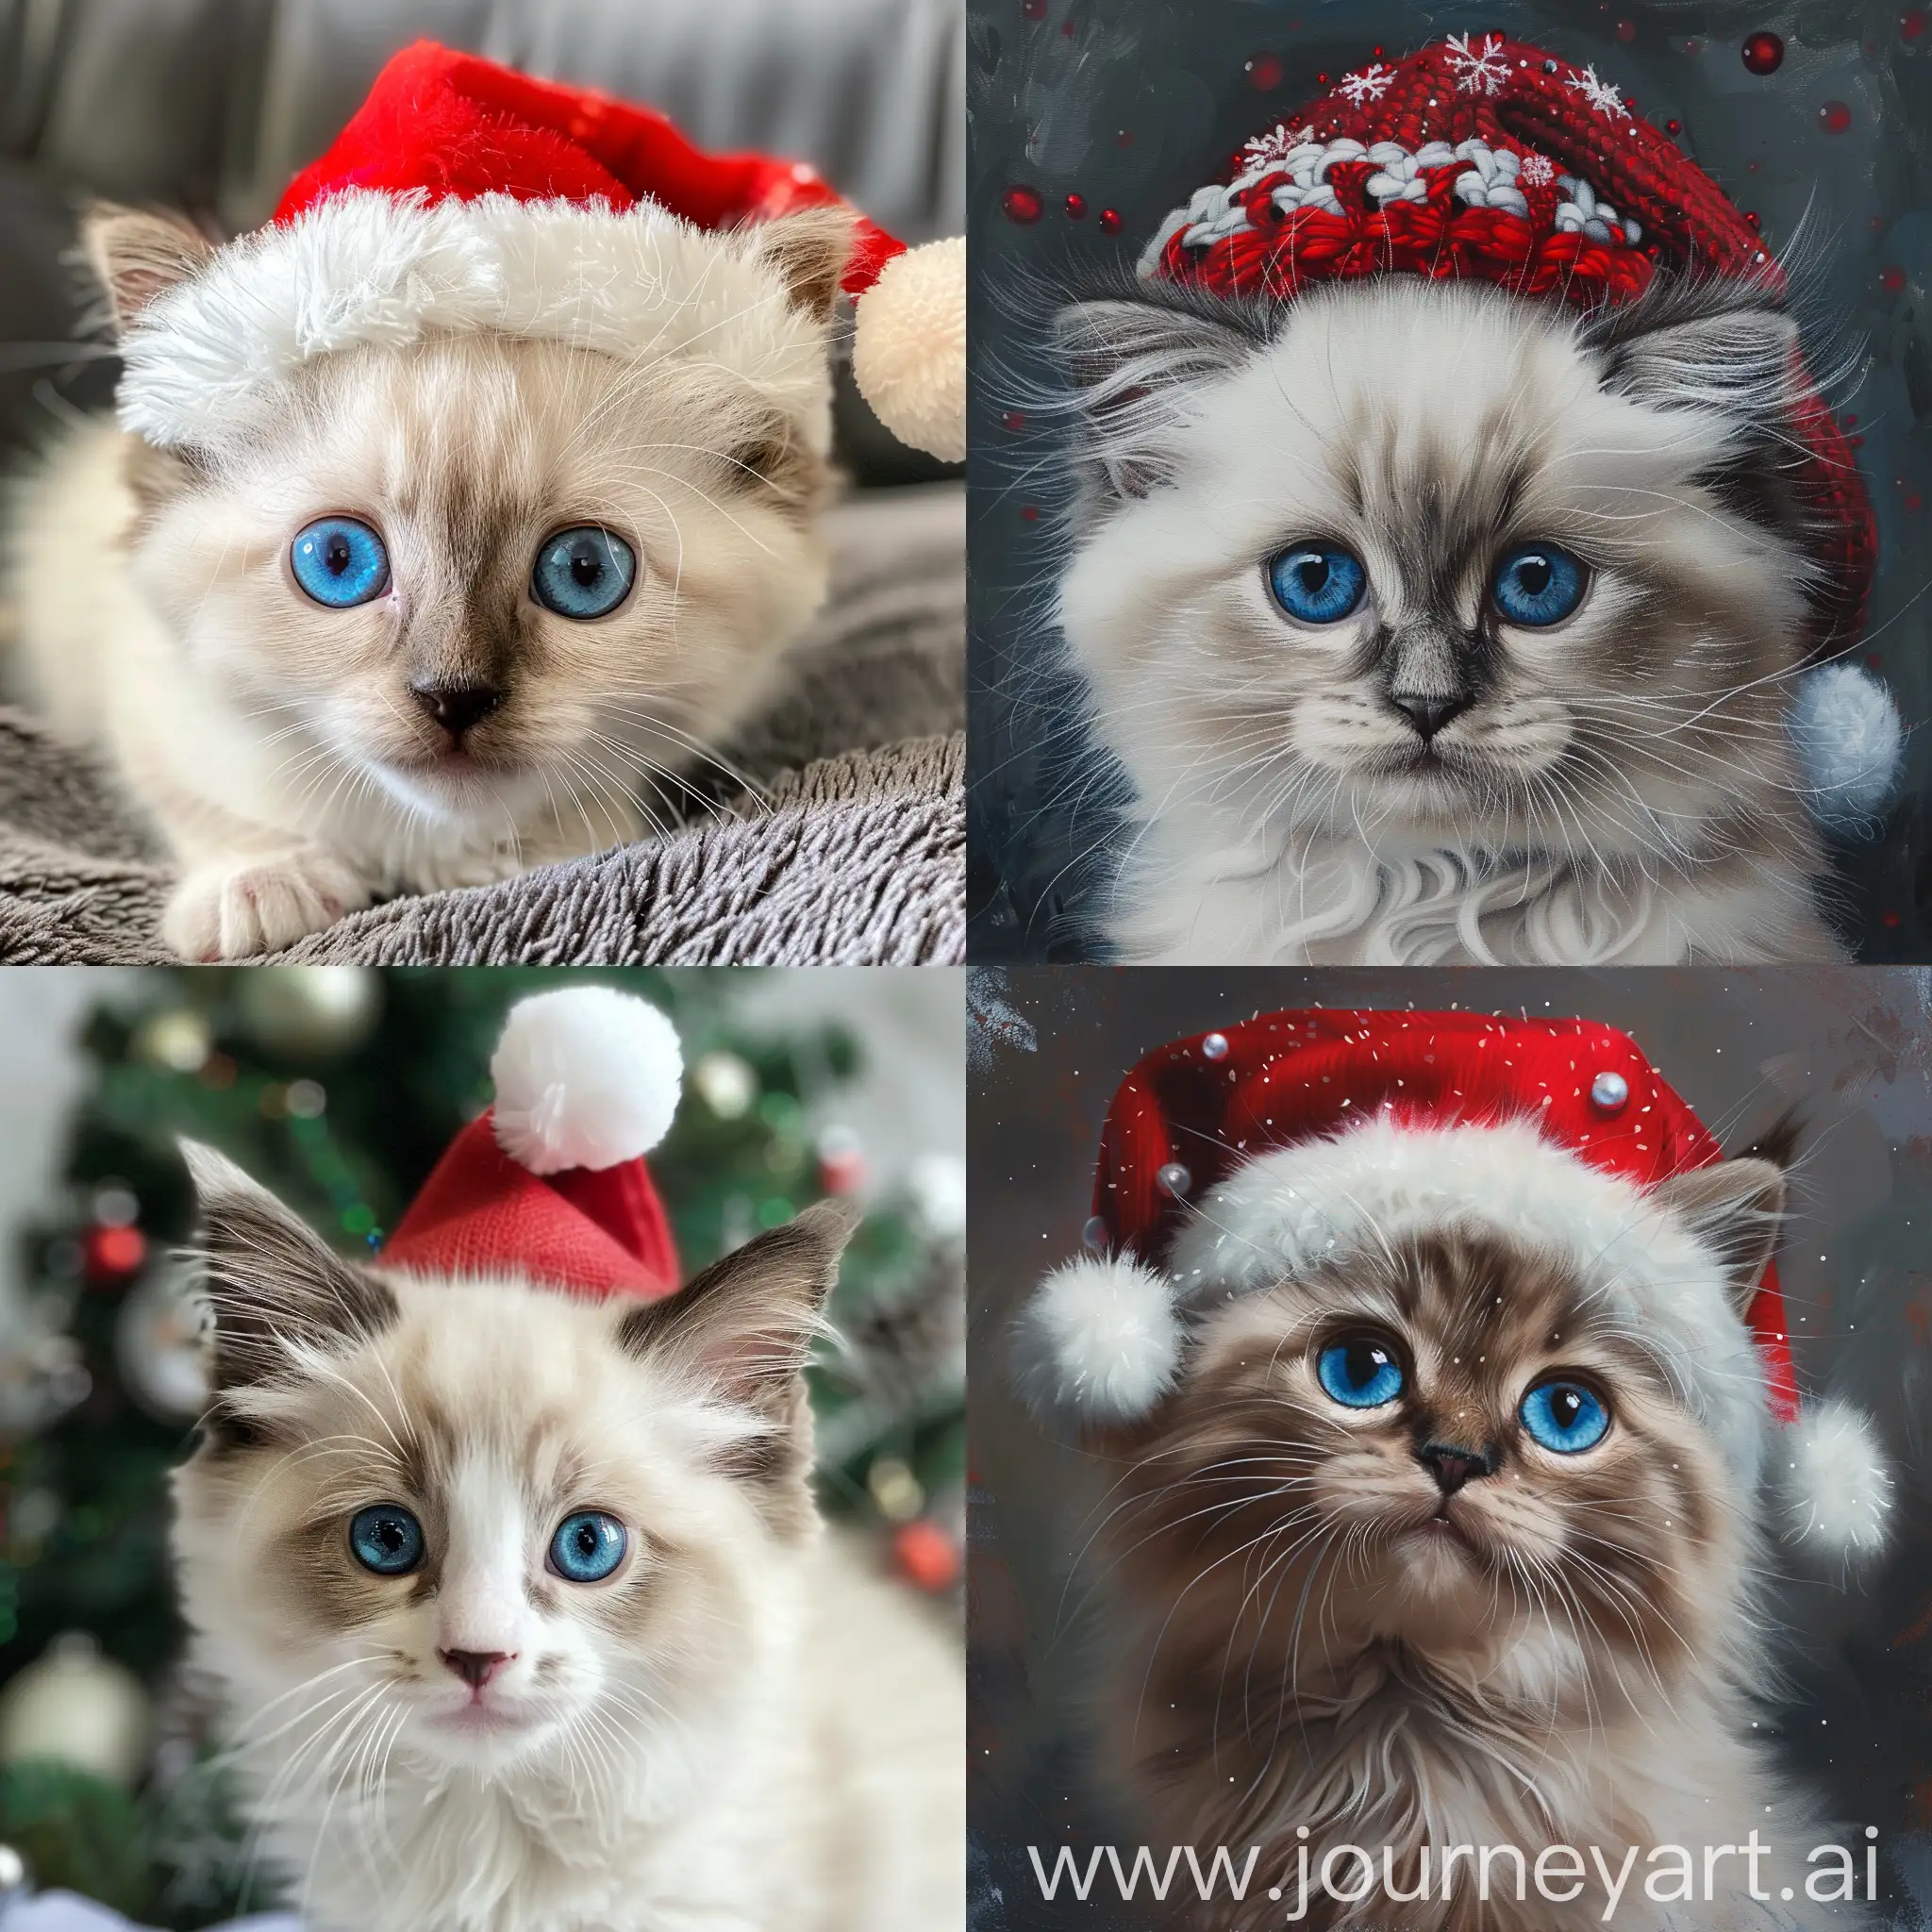 Adorable-Ragdoll-Kitten-with-Big-Blue-Eyes-in-Festive-Cap